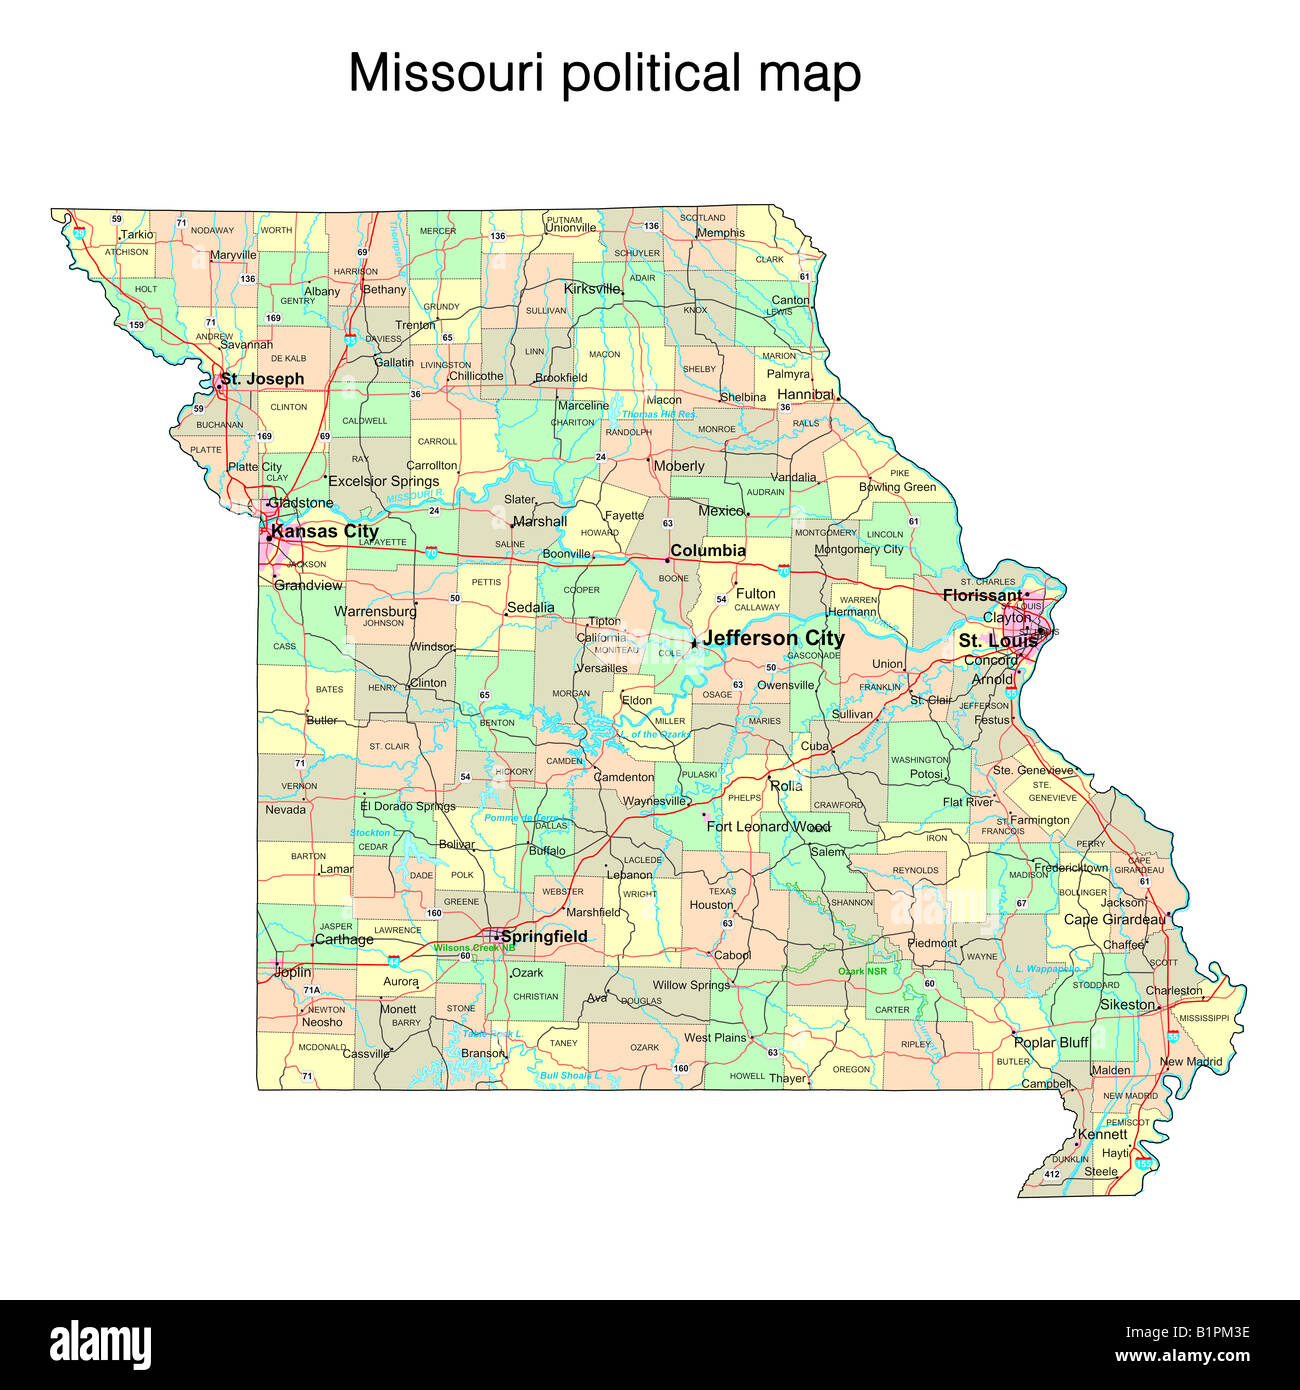 Missouri state political map Stock Photo